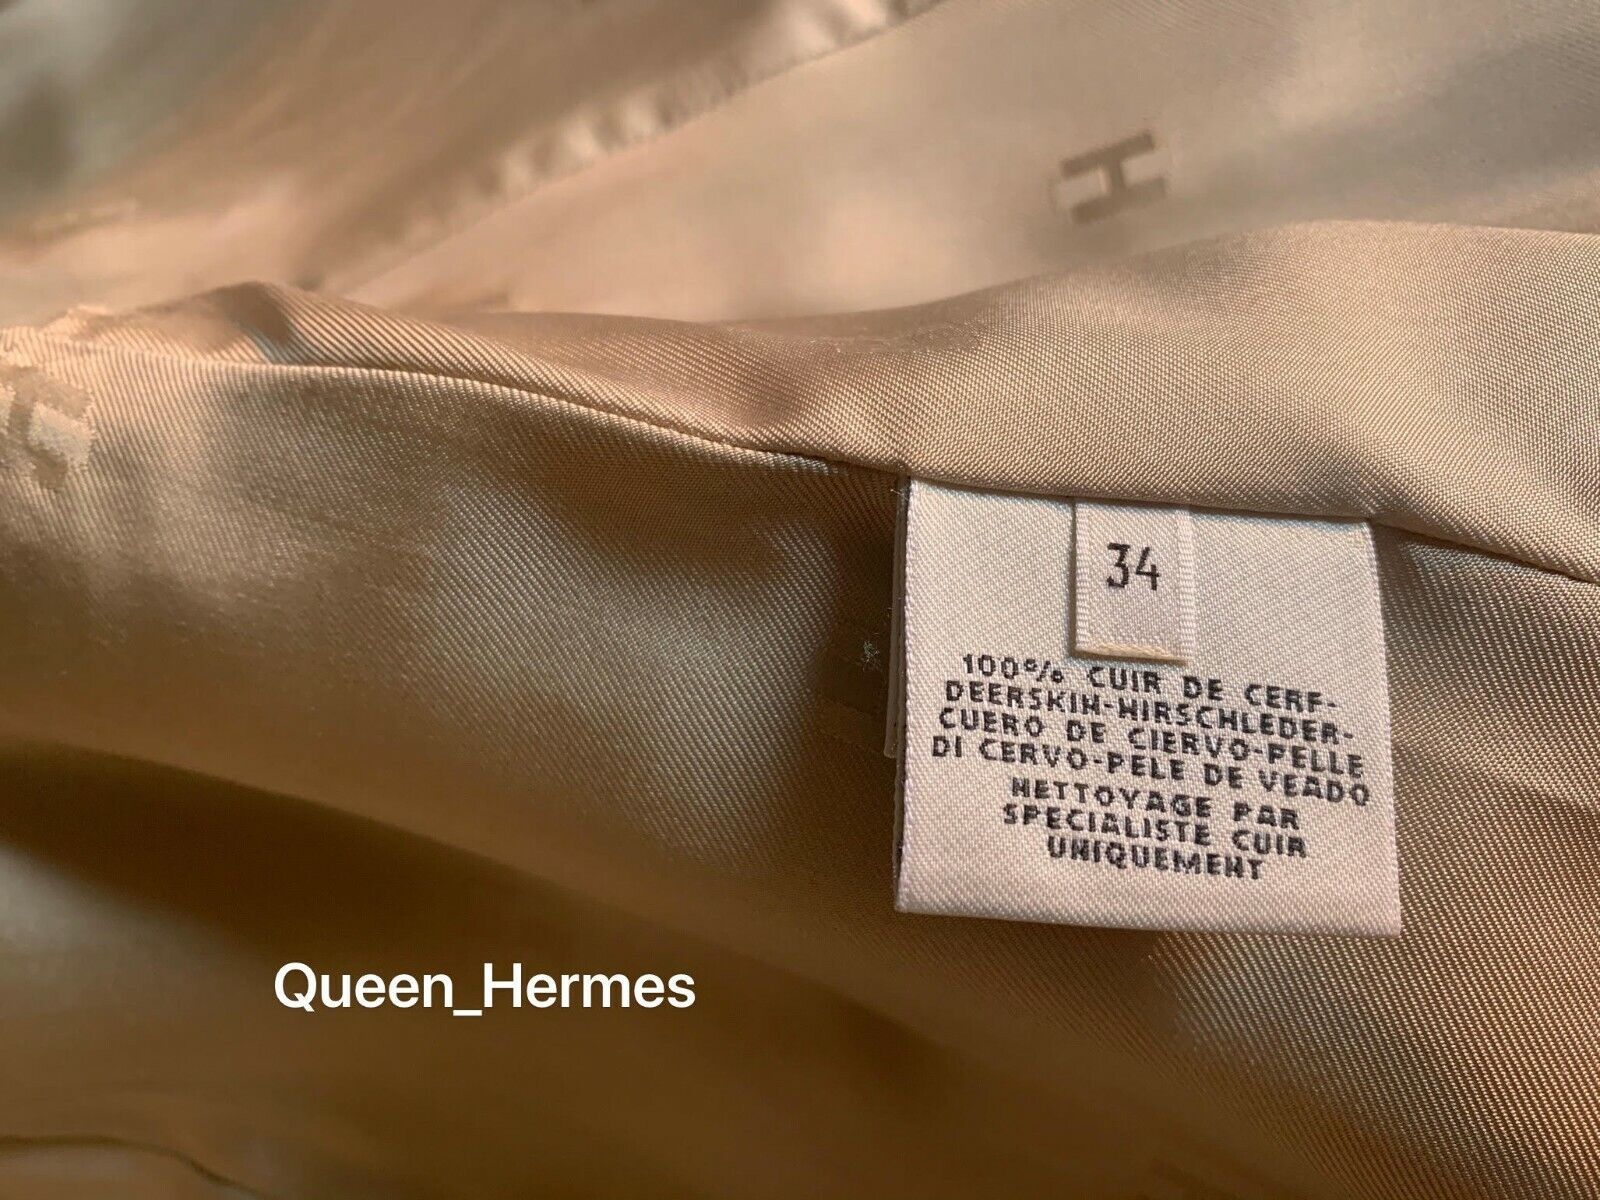 Authentic HERMES Deerskin Coat, Size 34, Retail $7000